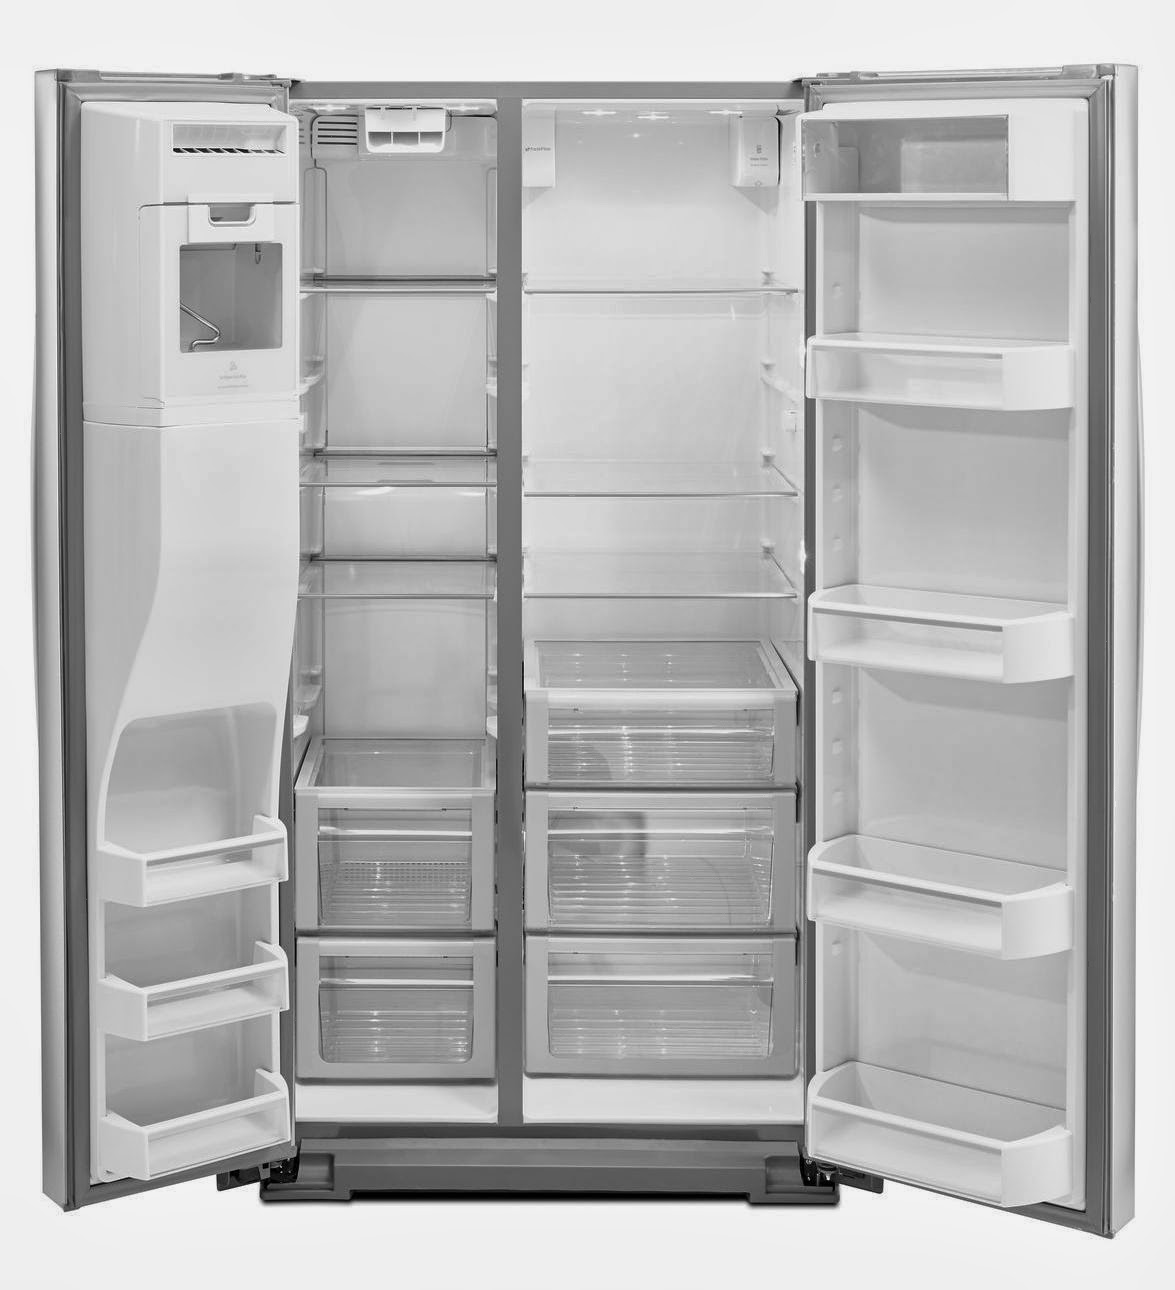 Whirlpool Refrigerator Brand: WRS950SIAE Refrigerators